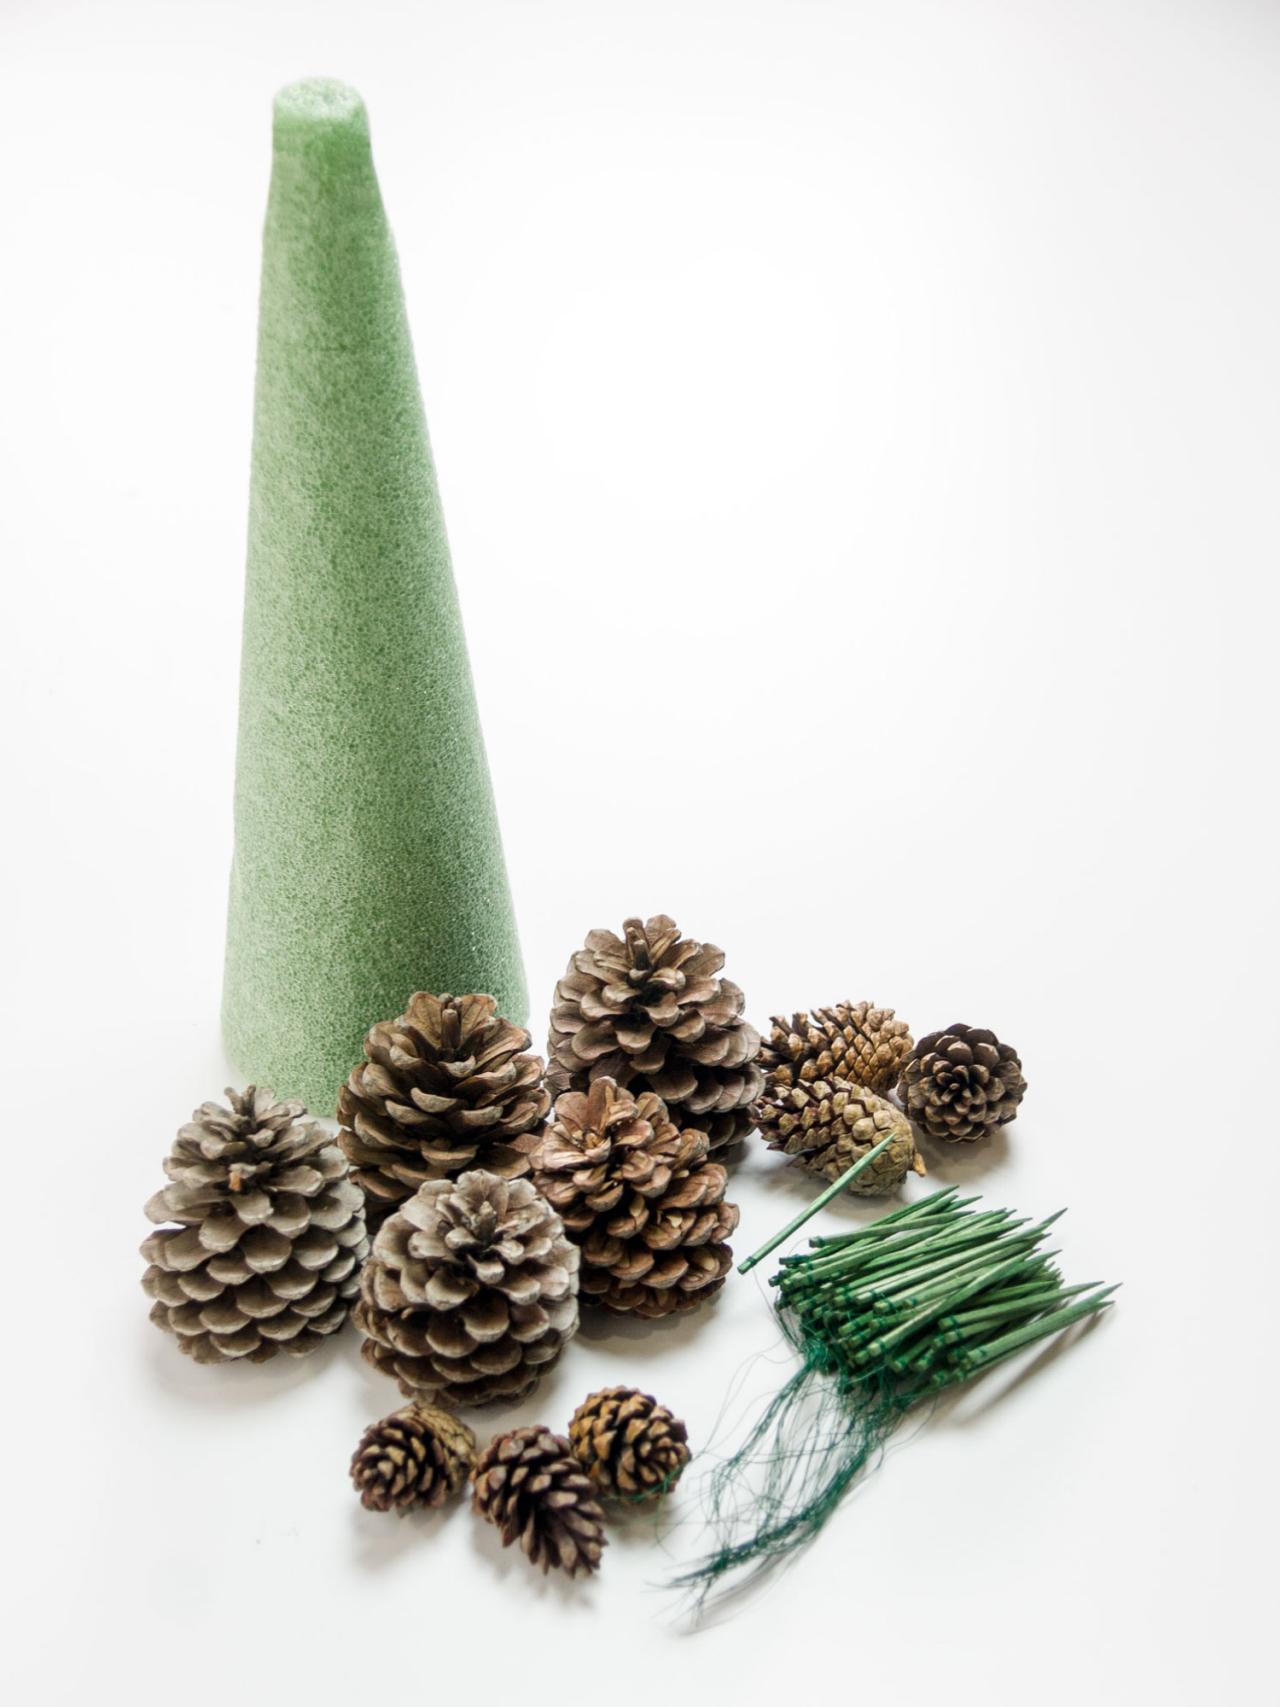 DIY holiday decoration: Pinecone Christmas trees – The NAU Review